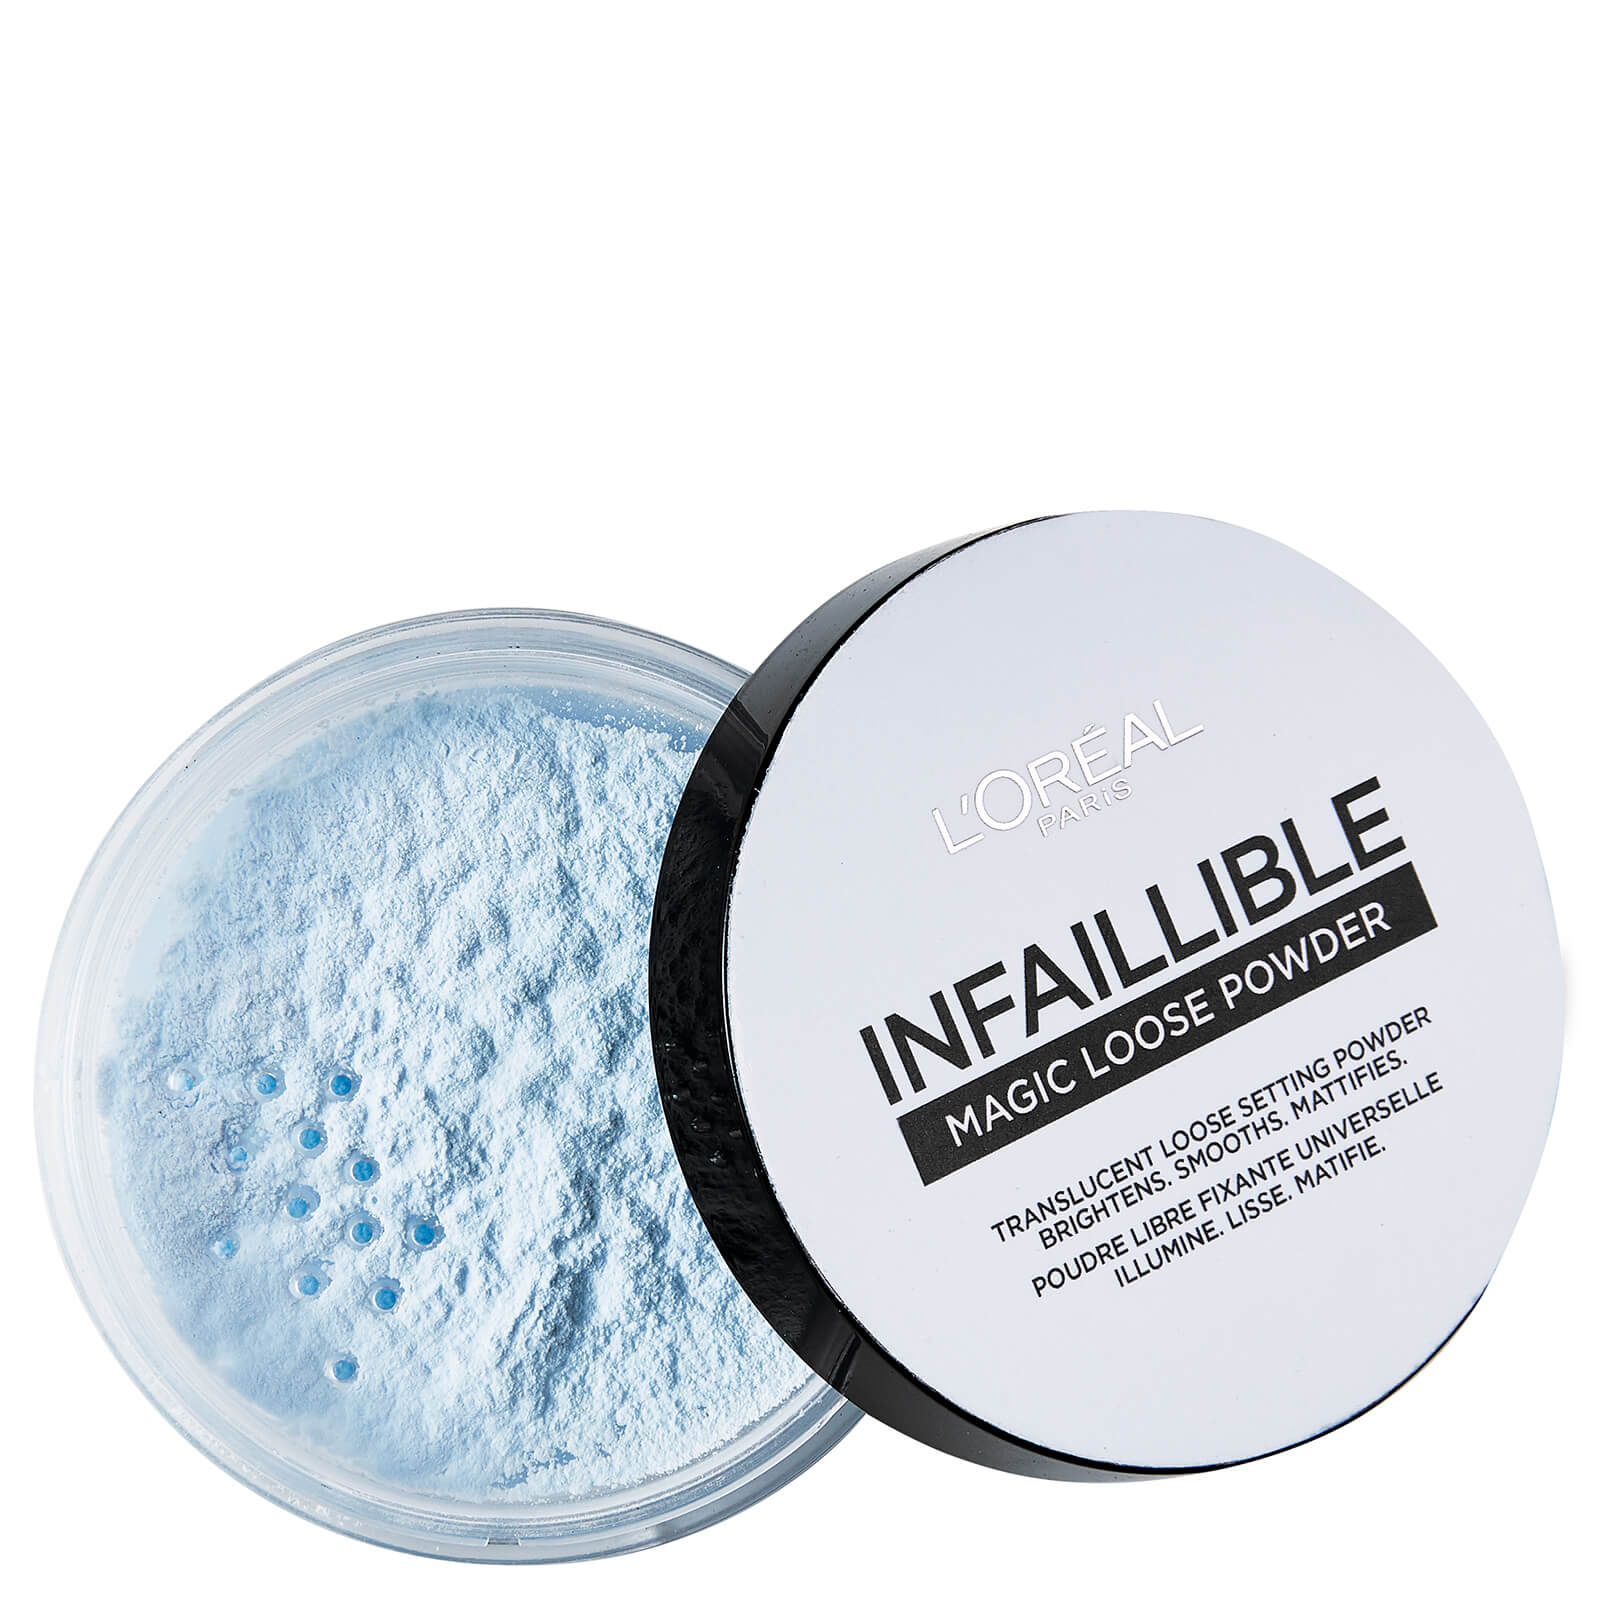 L'Oréal Paris Infallible Loose Setting Powder -irtokiinnityspuuteri 6g, 01 Universal